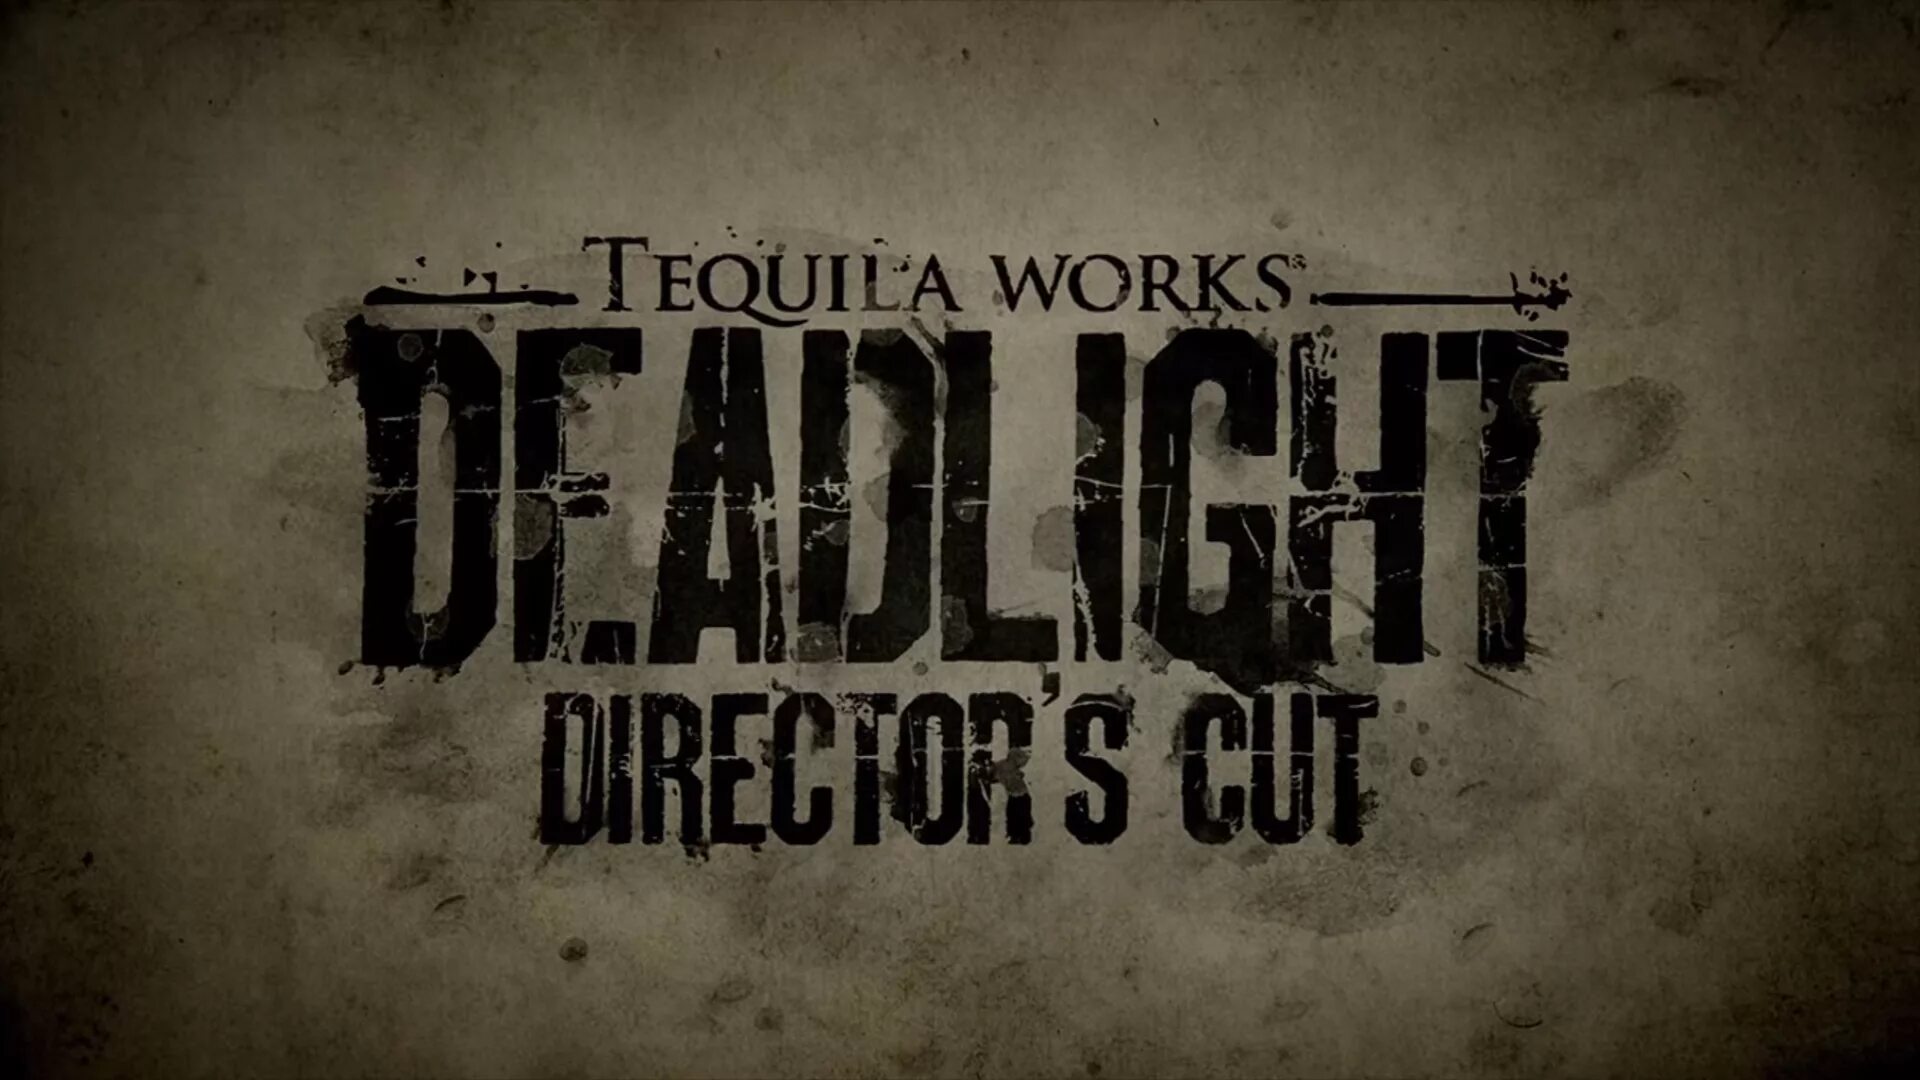 Deadlight directors cut. Deadlight. Deadlight игра. Deadlight: Director's Cut. Deadlight 1.